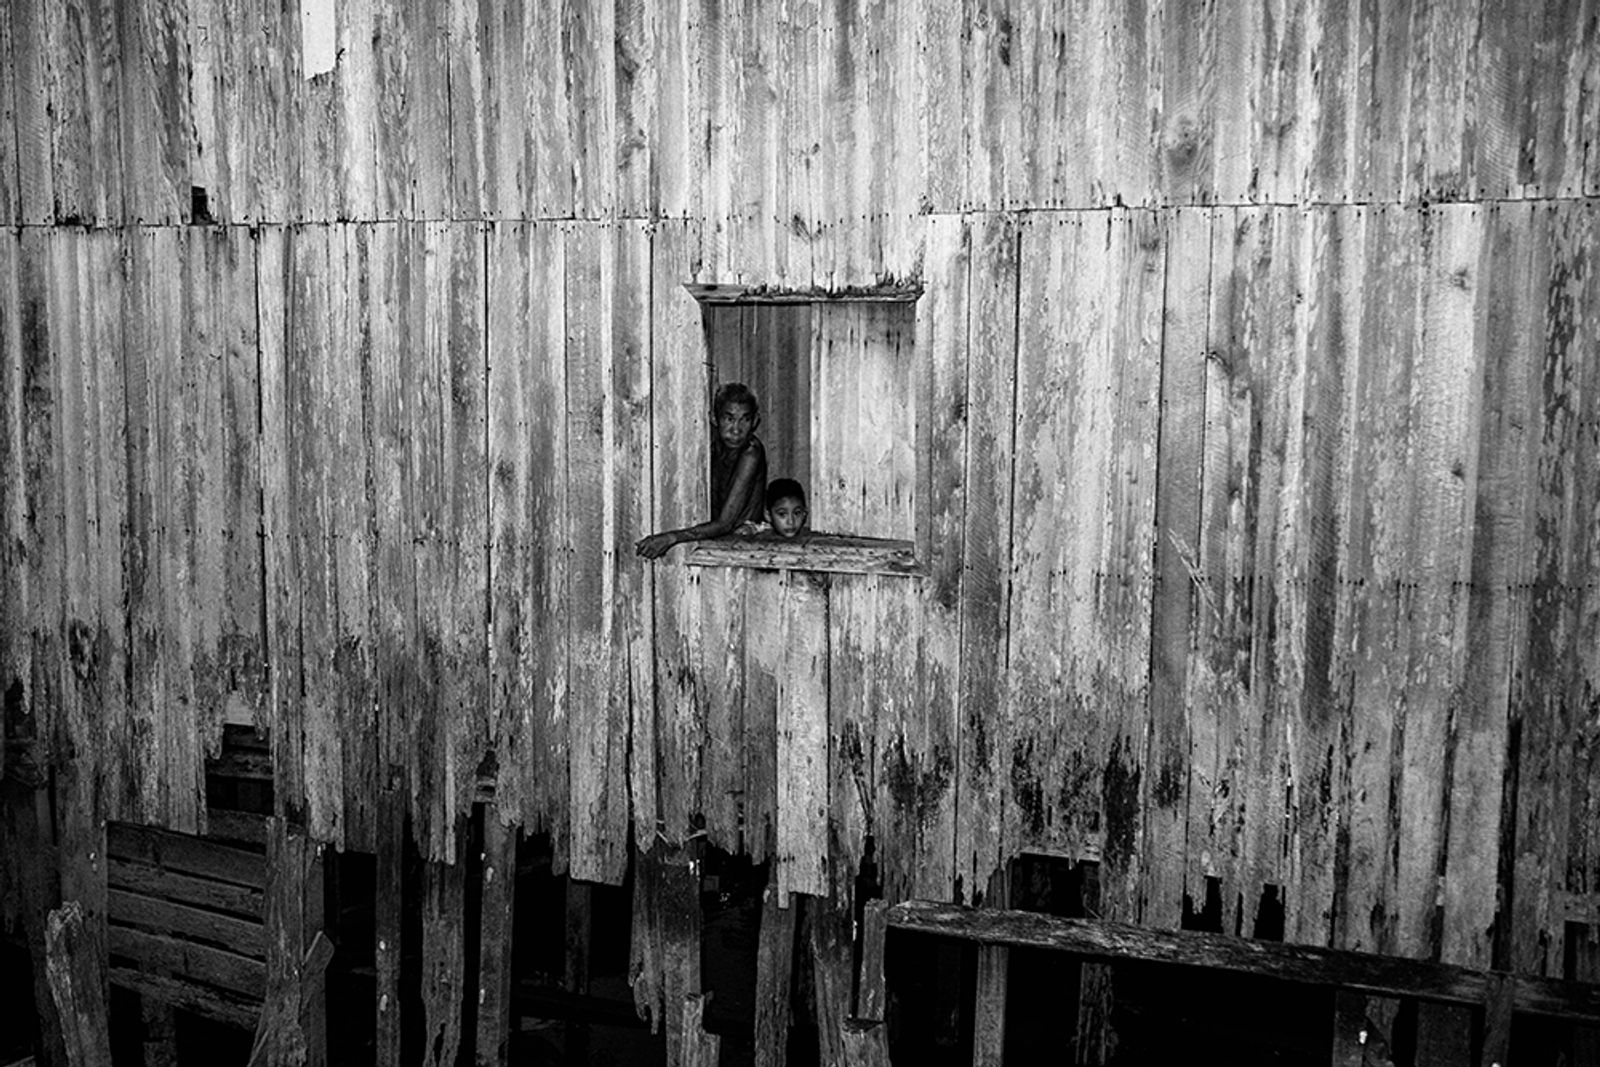 © Tommaso Protti - Residents in Vila dos Barcos, a poor neighborhood of stilt houses in Belem.